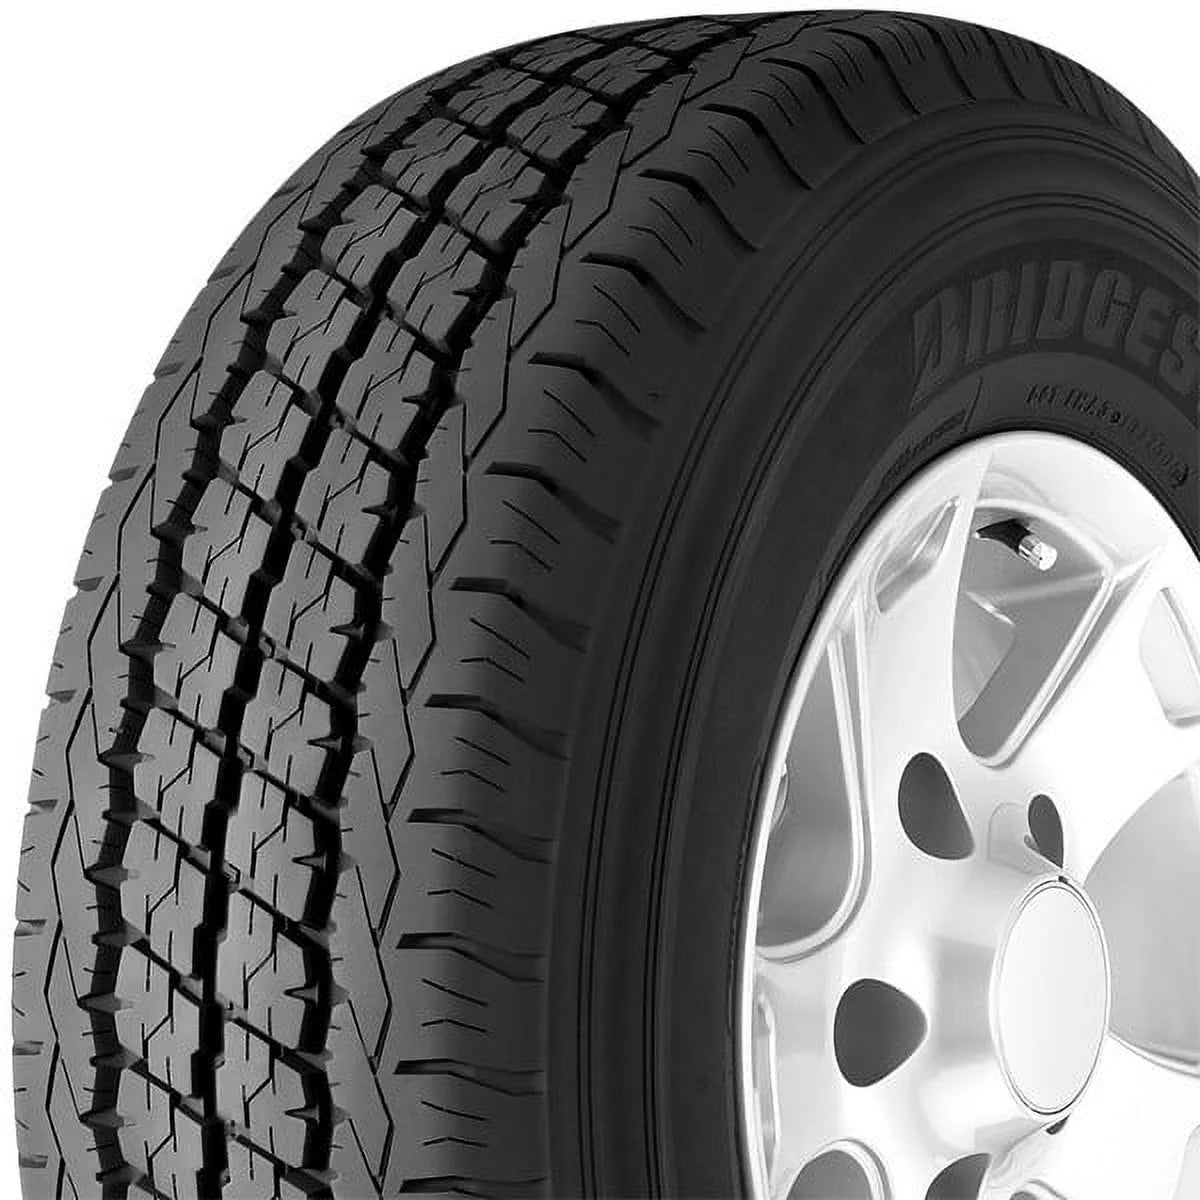 1 Bridgestone DURAVIS R500 HD LT 245/75R16 120/116R Commercial Truck Van Tires BR191860 / 245/75/16 / 2457516